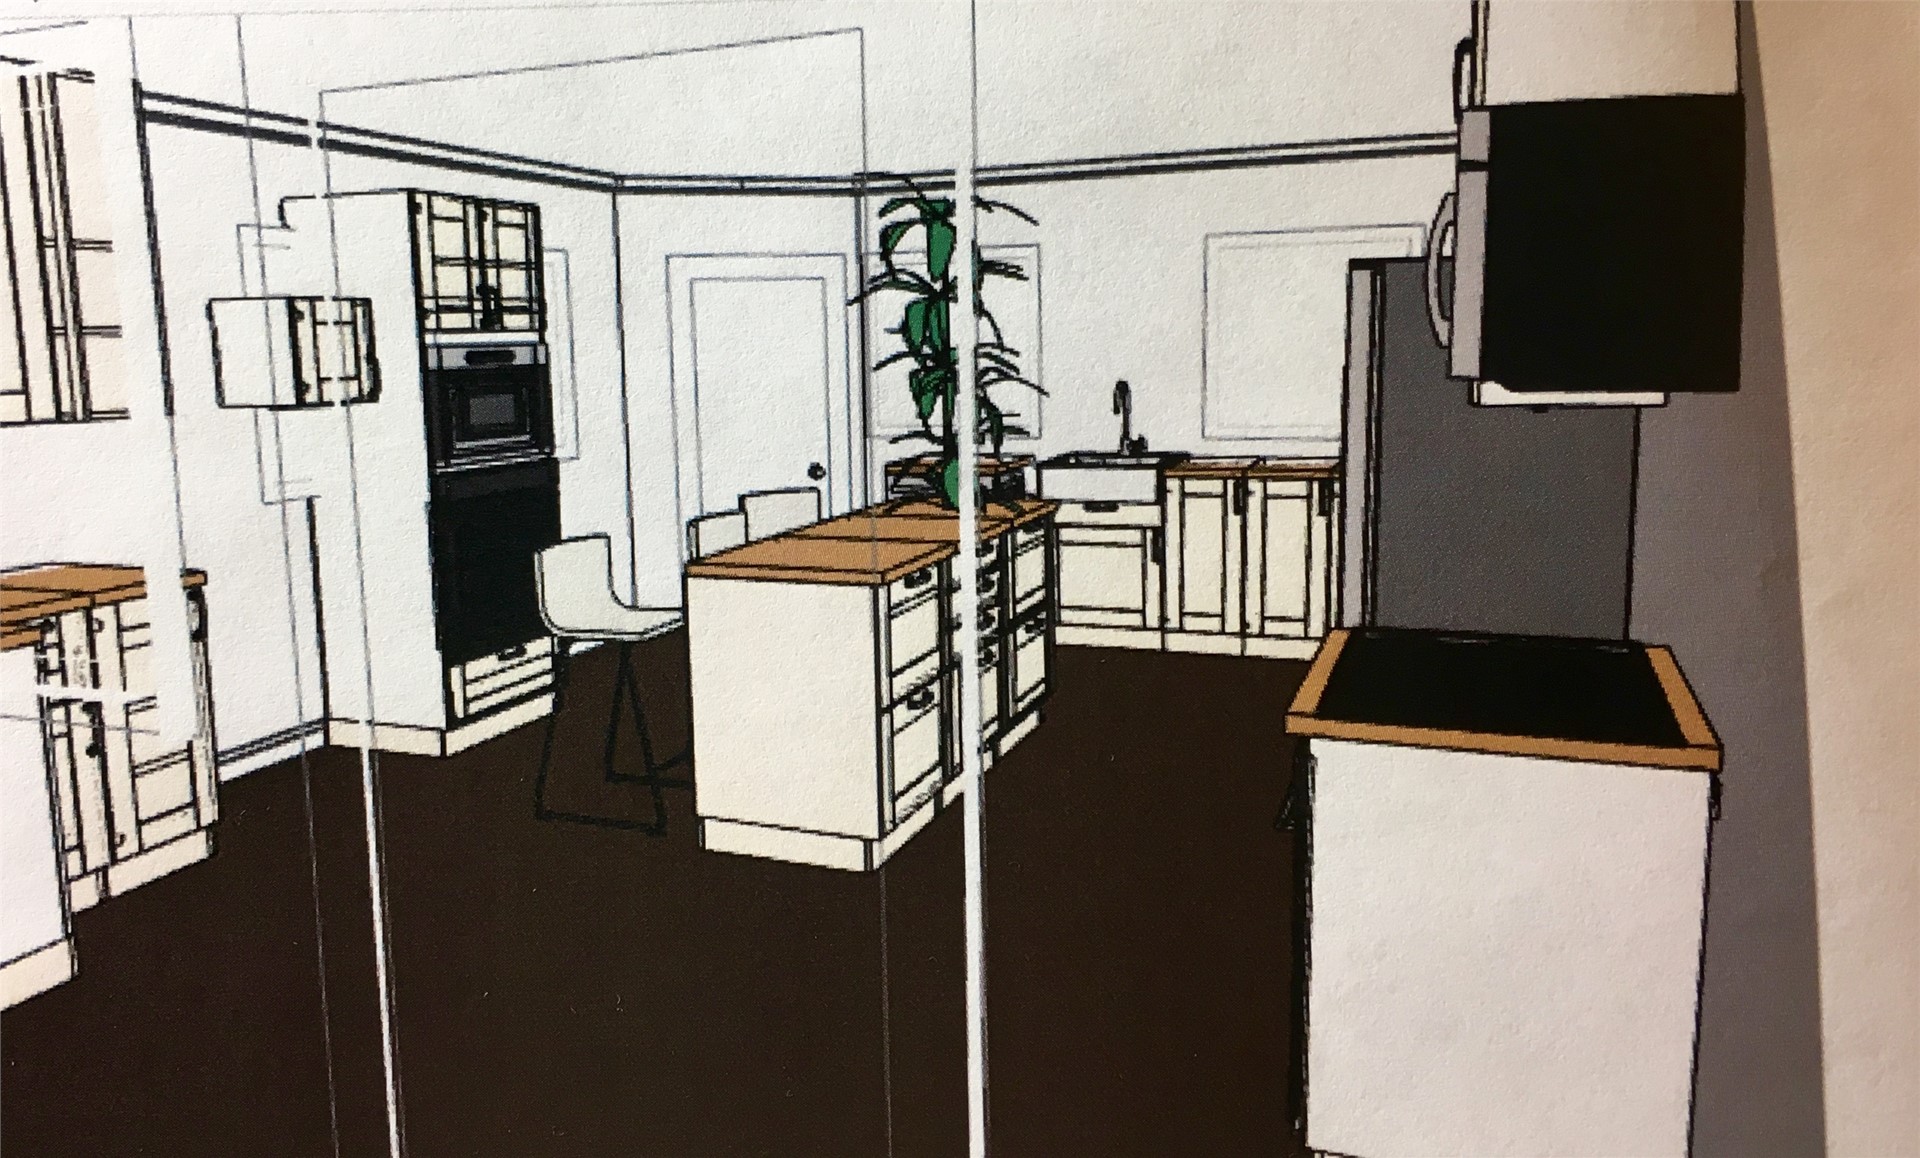 CADD-assisted kitchen design